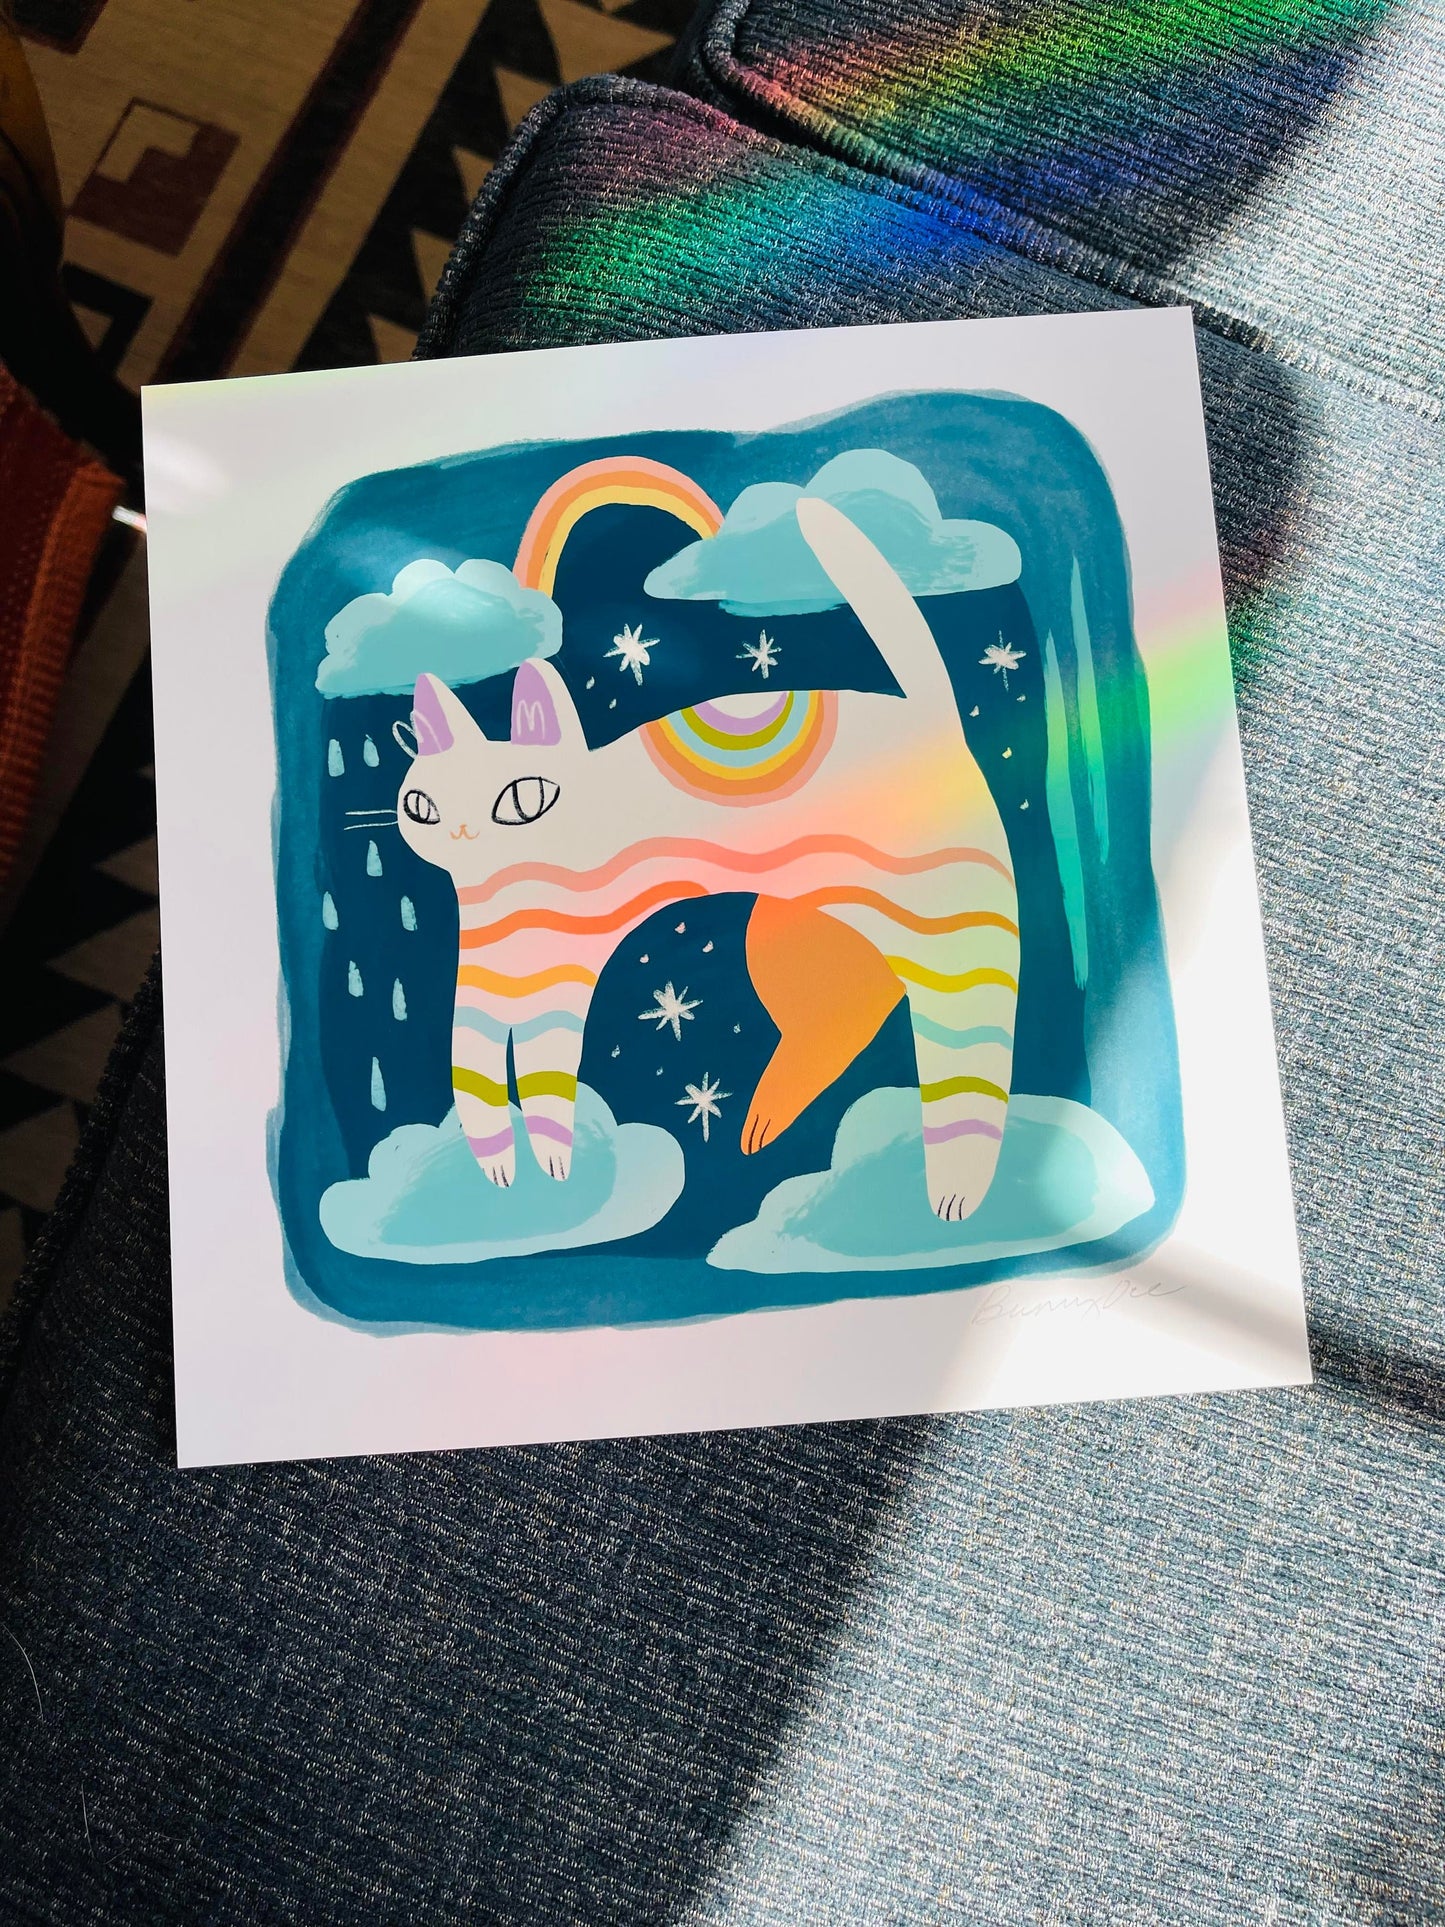 The rainbow cat 8x8 inch prints